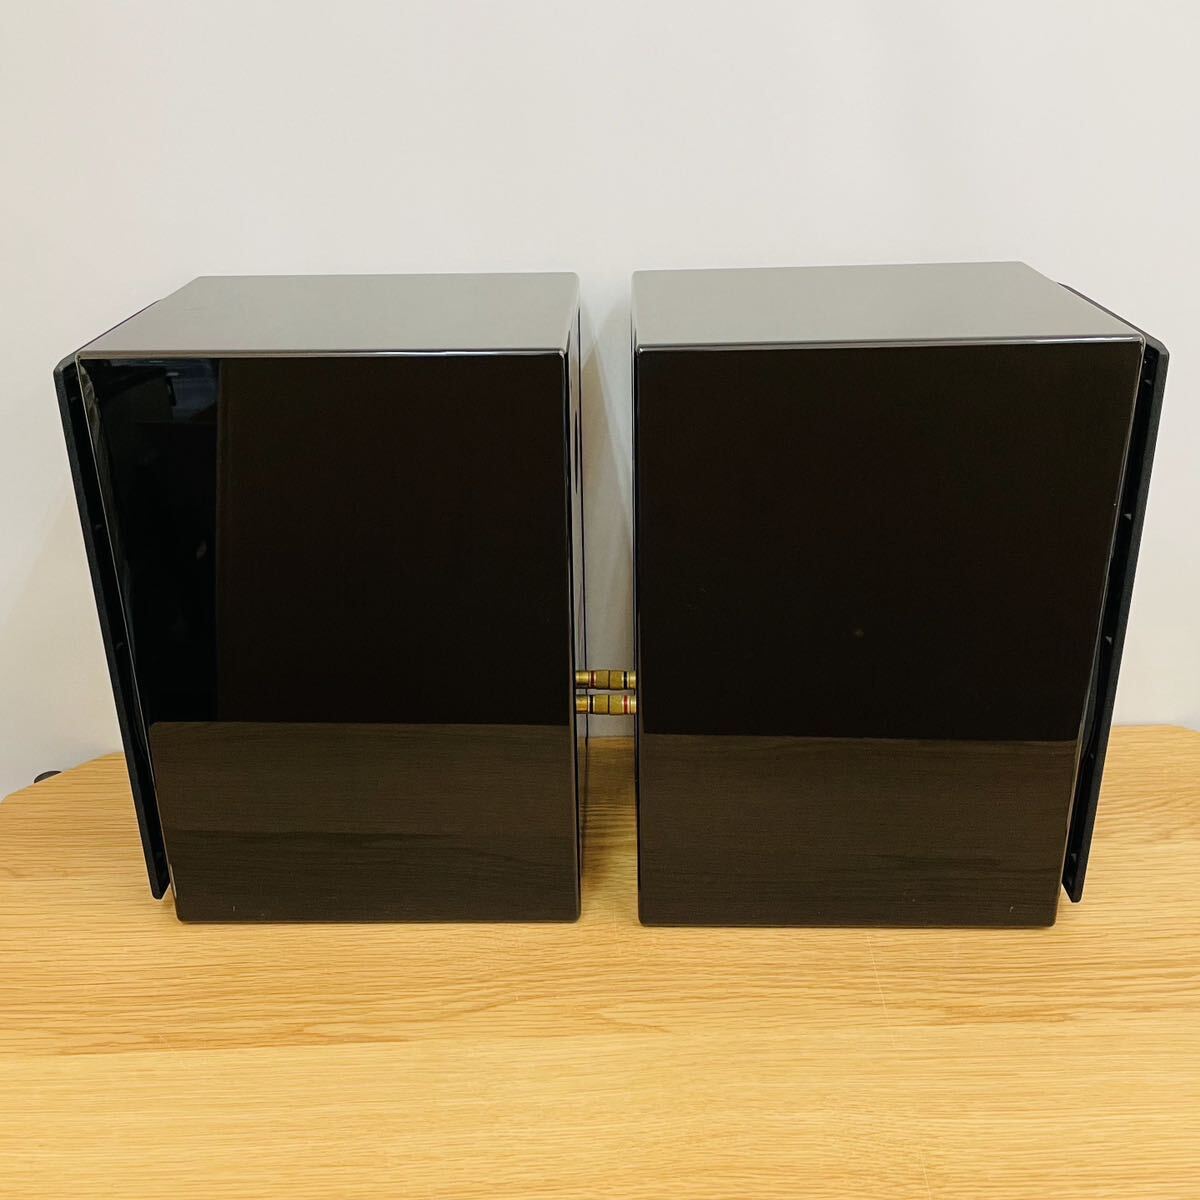 DENON SC-E757 Speaker Denon динамик пара i17975 120 размер отправка работа хороший 